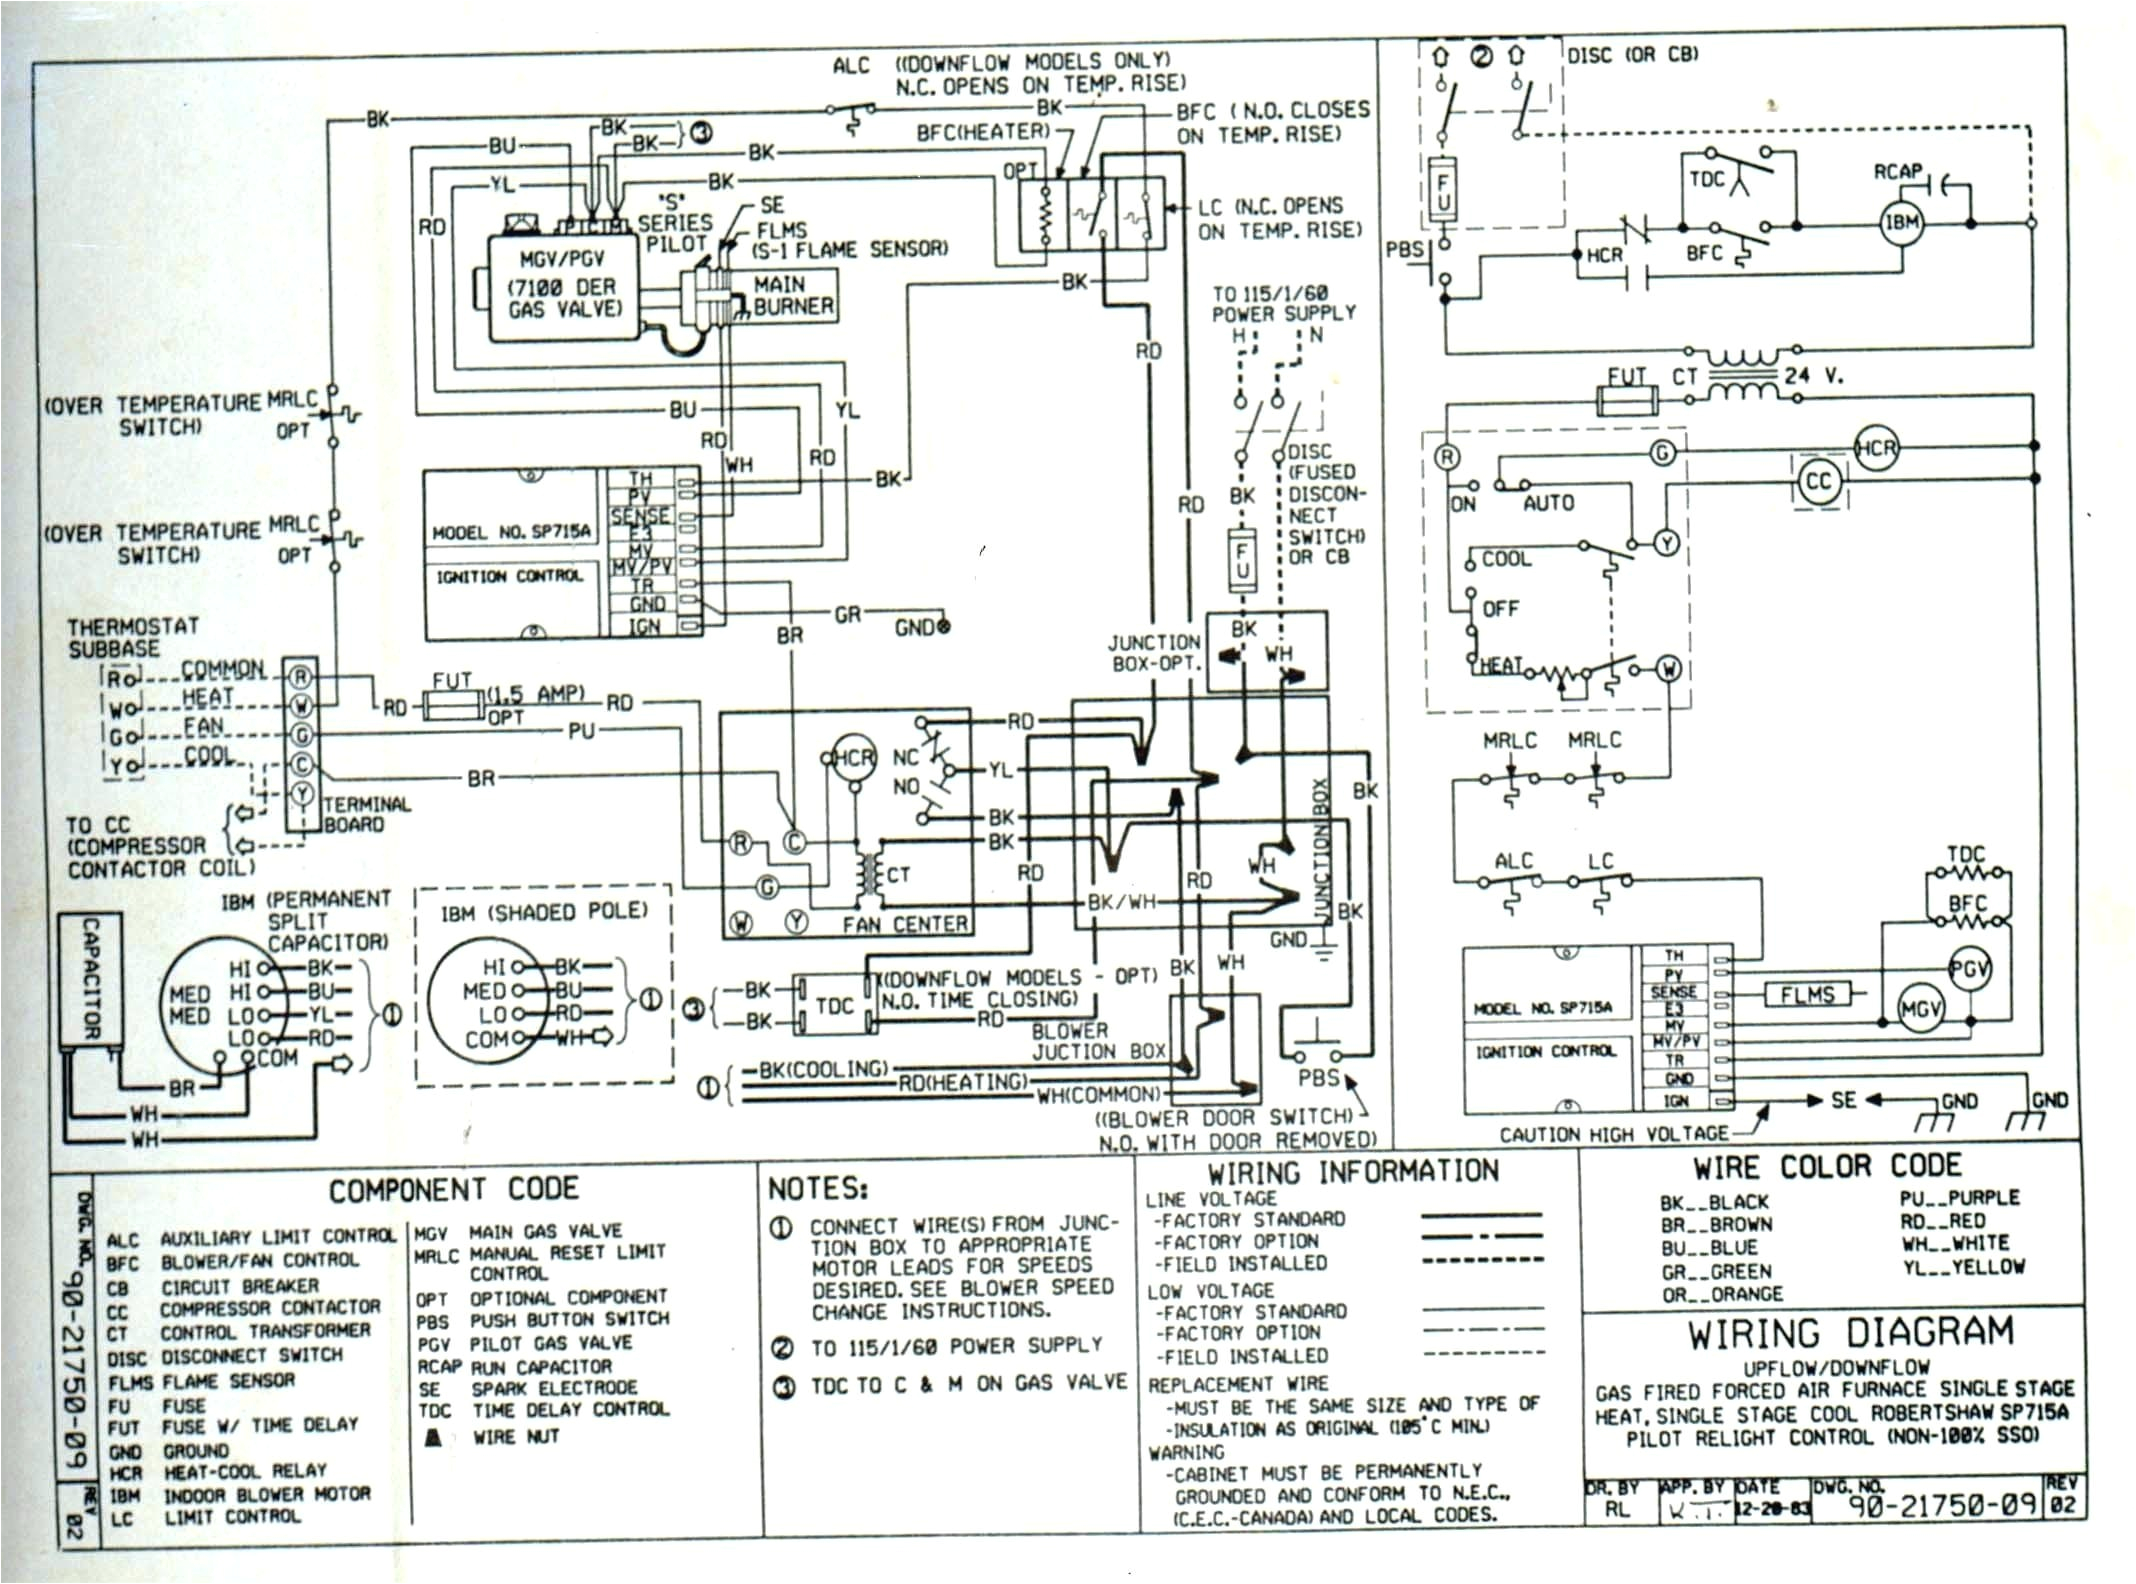 trane schematics diagrams wiring diagram view trane hvac schematics wiring diagram view trane schematics diagrams